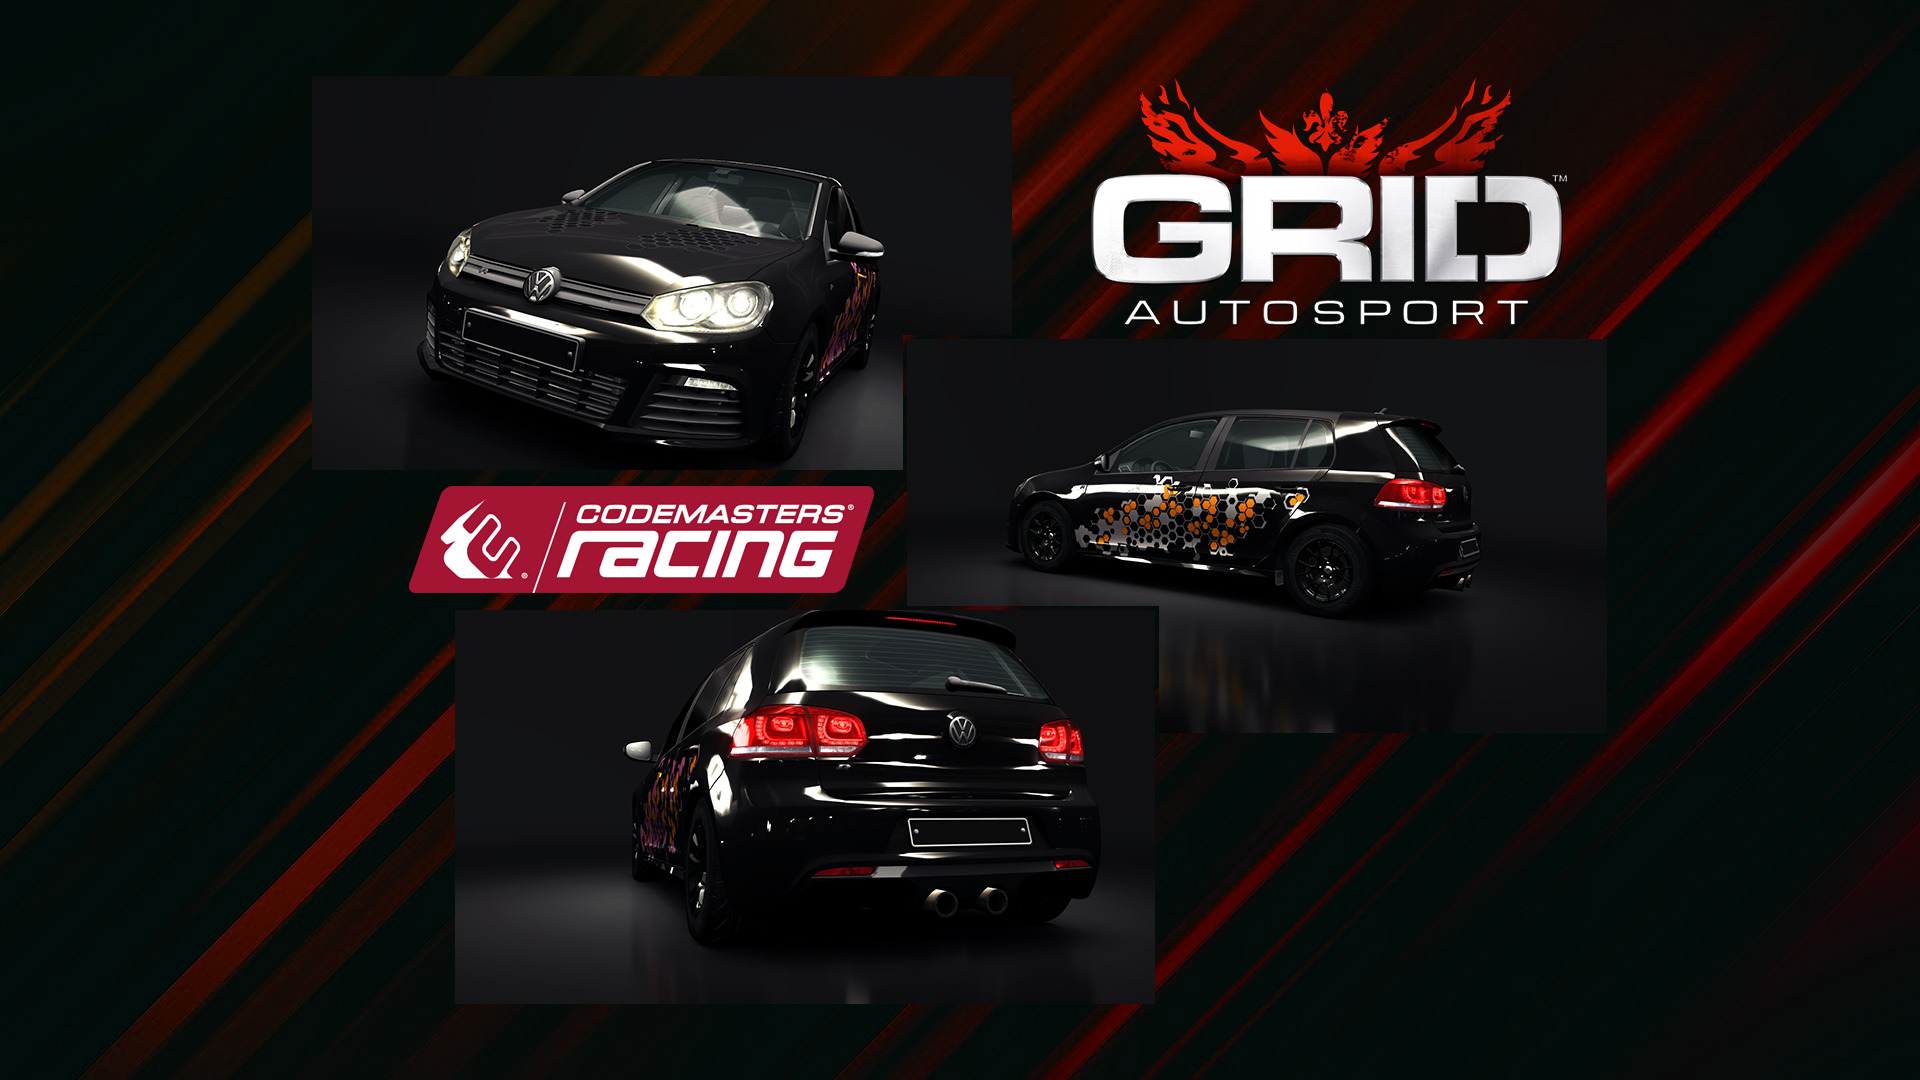 2440x1440 grid autosport image